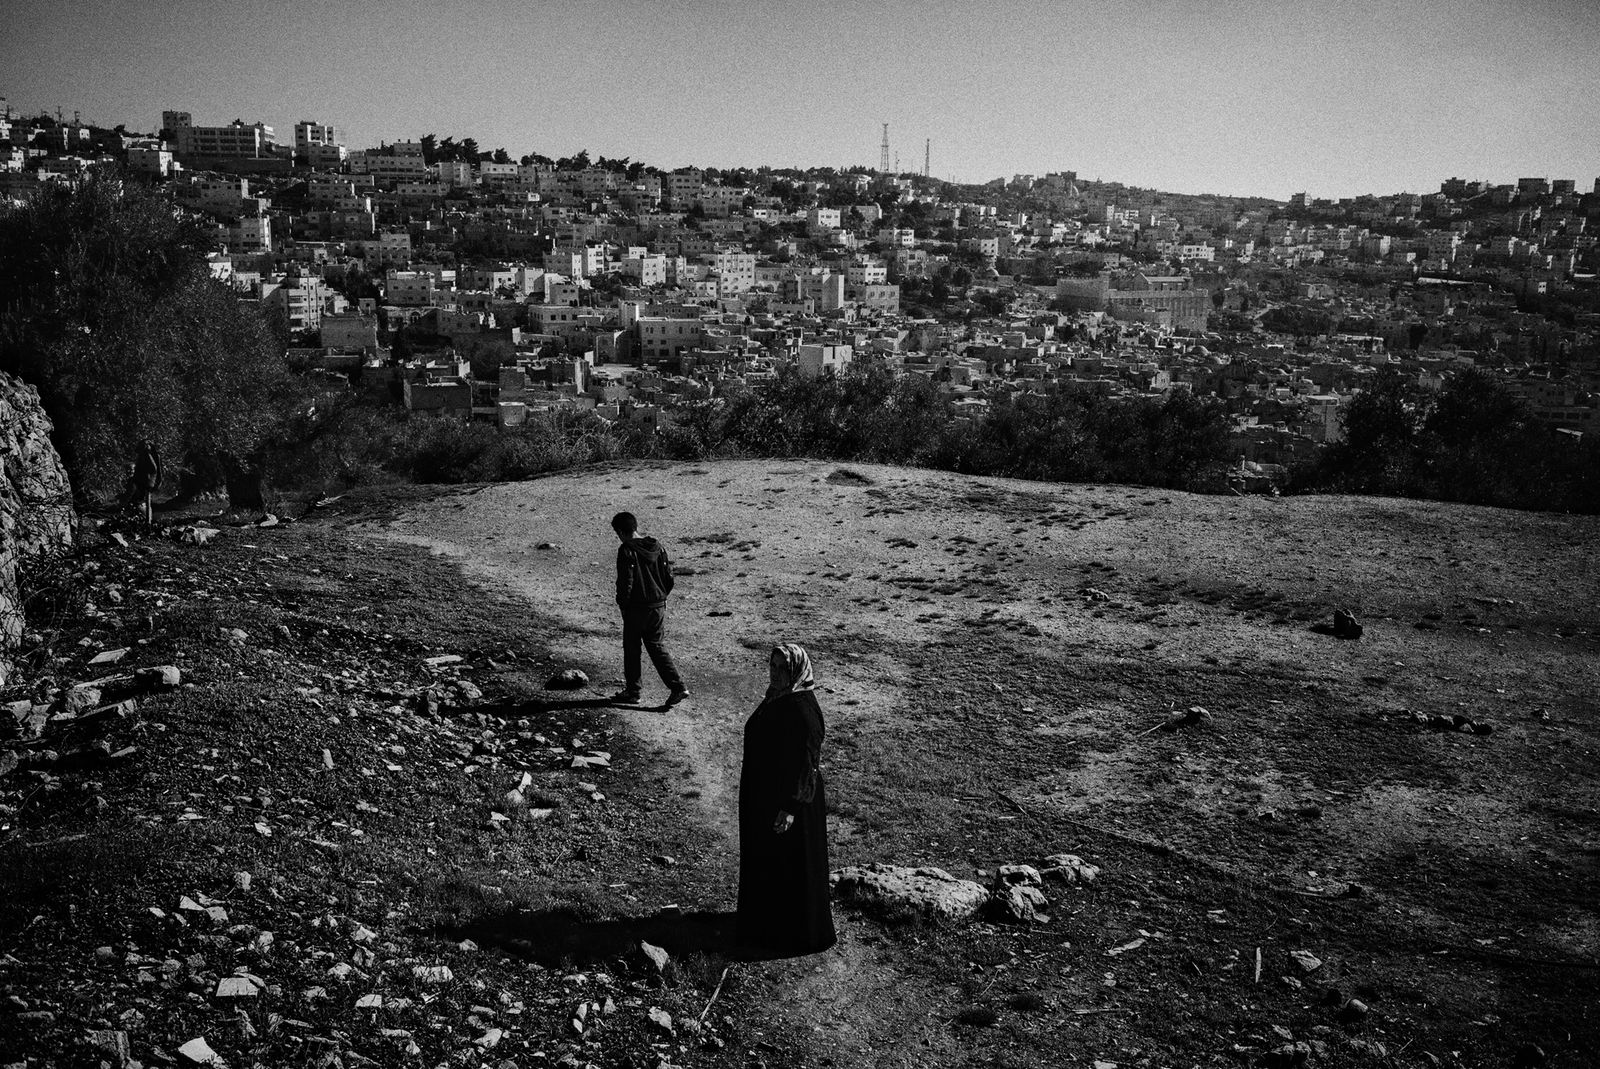 © Lorenzo Tugnoli - Image from the HEBRON / AL KHALIL photography project